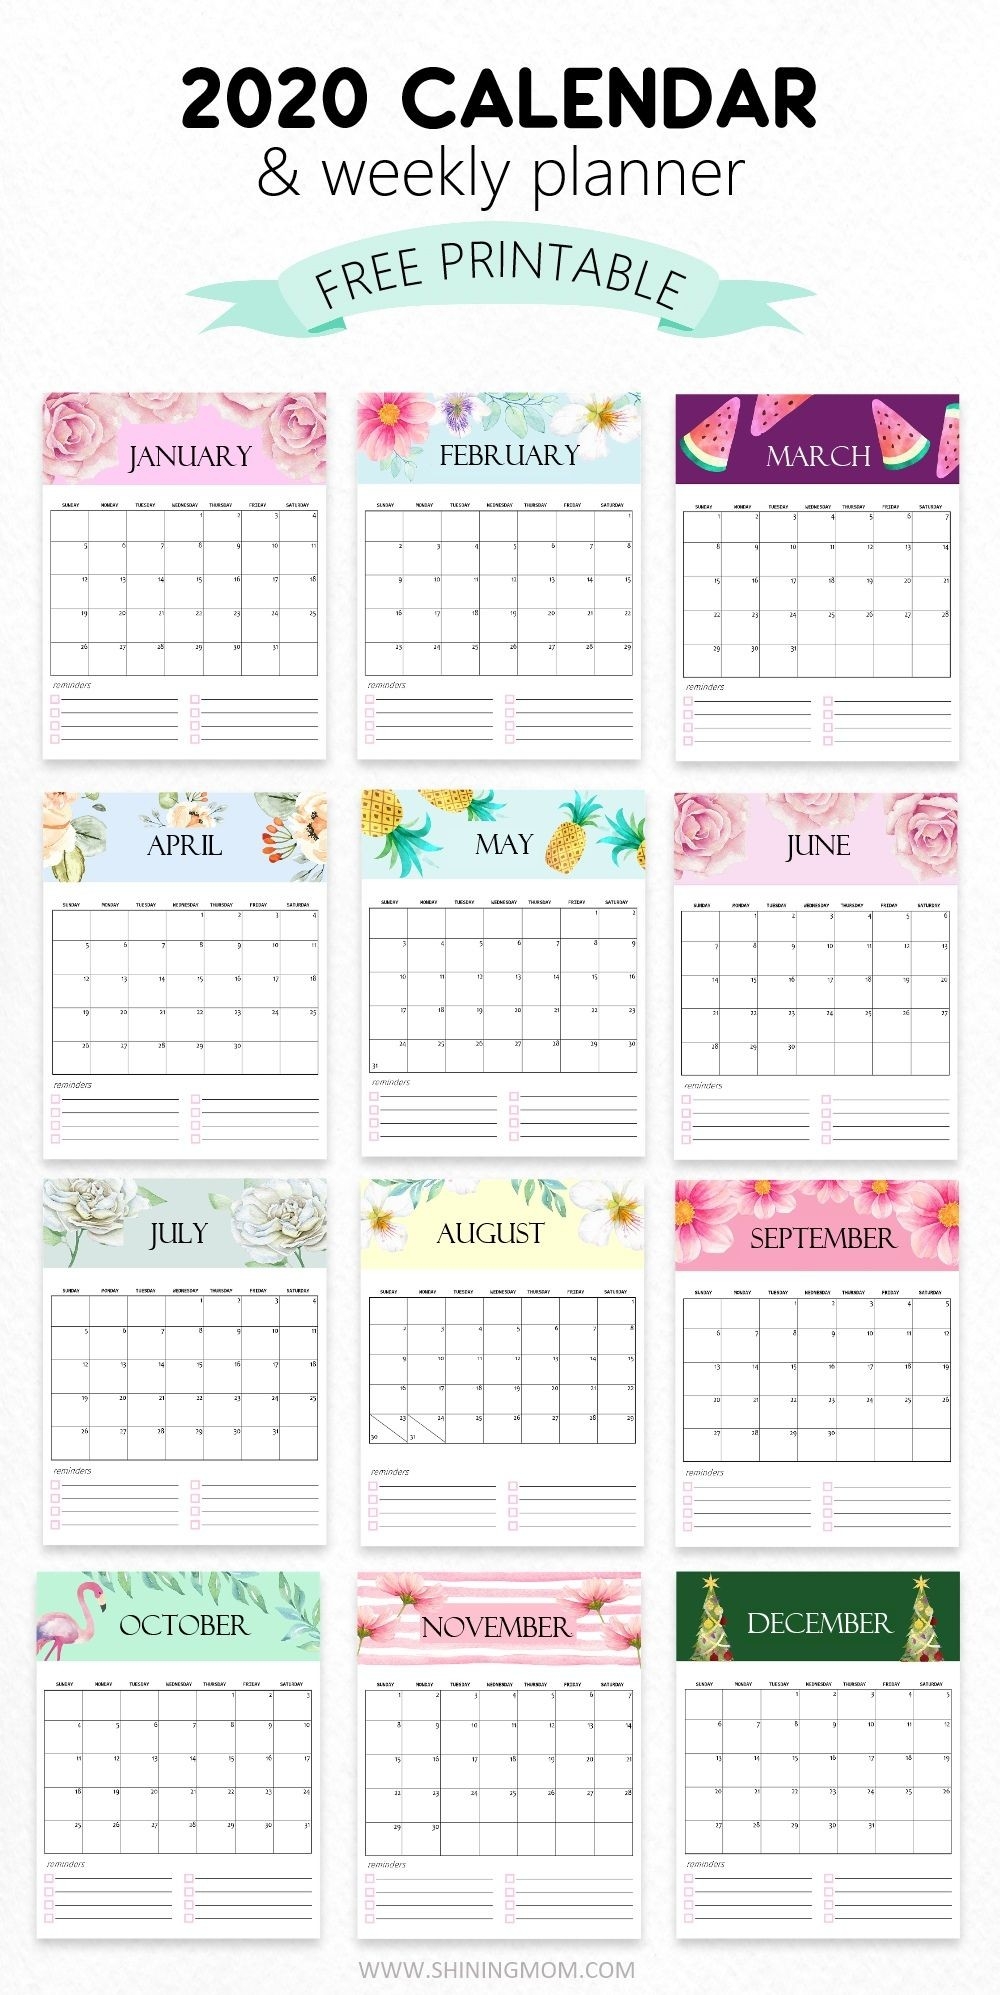 Free Calendar 2020 Printable: 12 Cute Monthly Designs To-Free Printable Two Page Monthly Calendar 2020